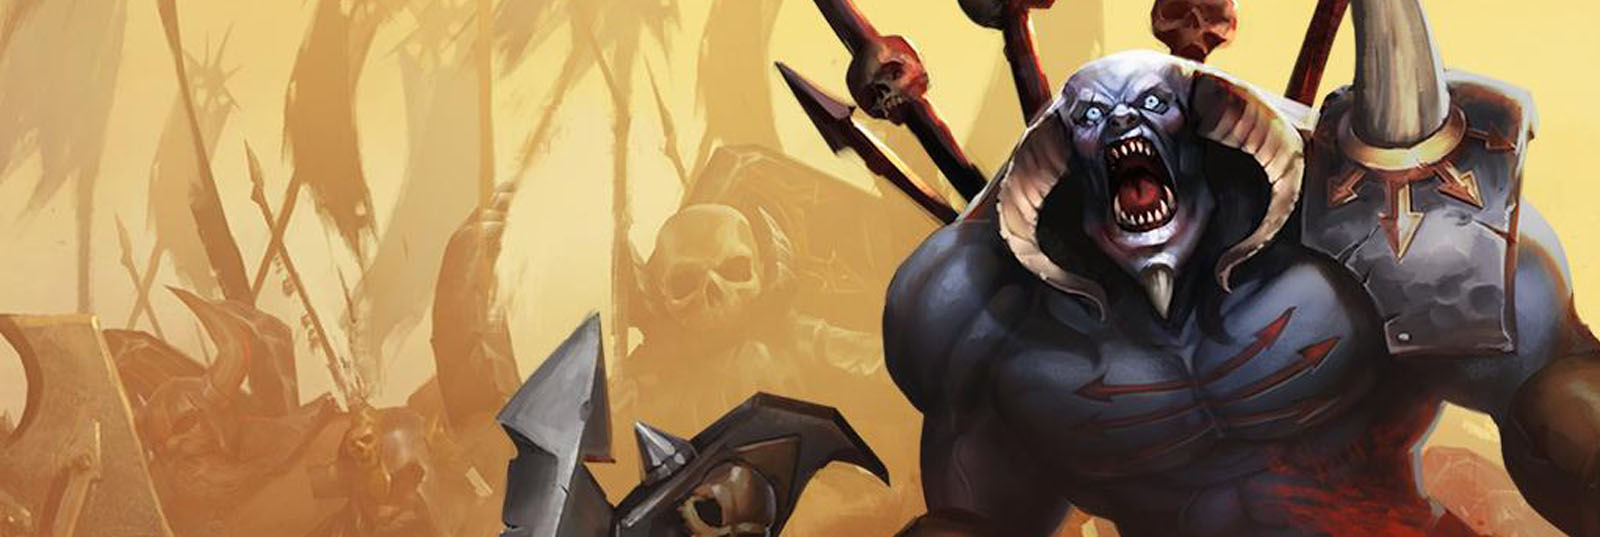 Warhammer: Chaos & Conquest banner